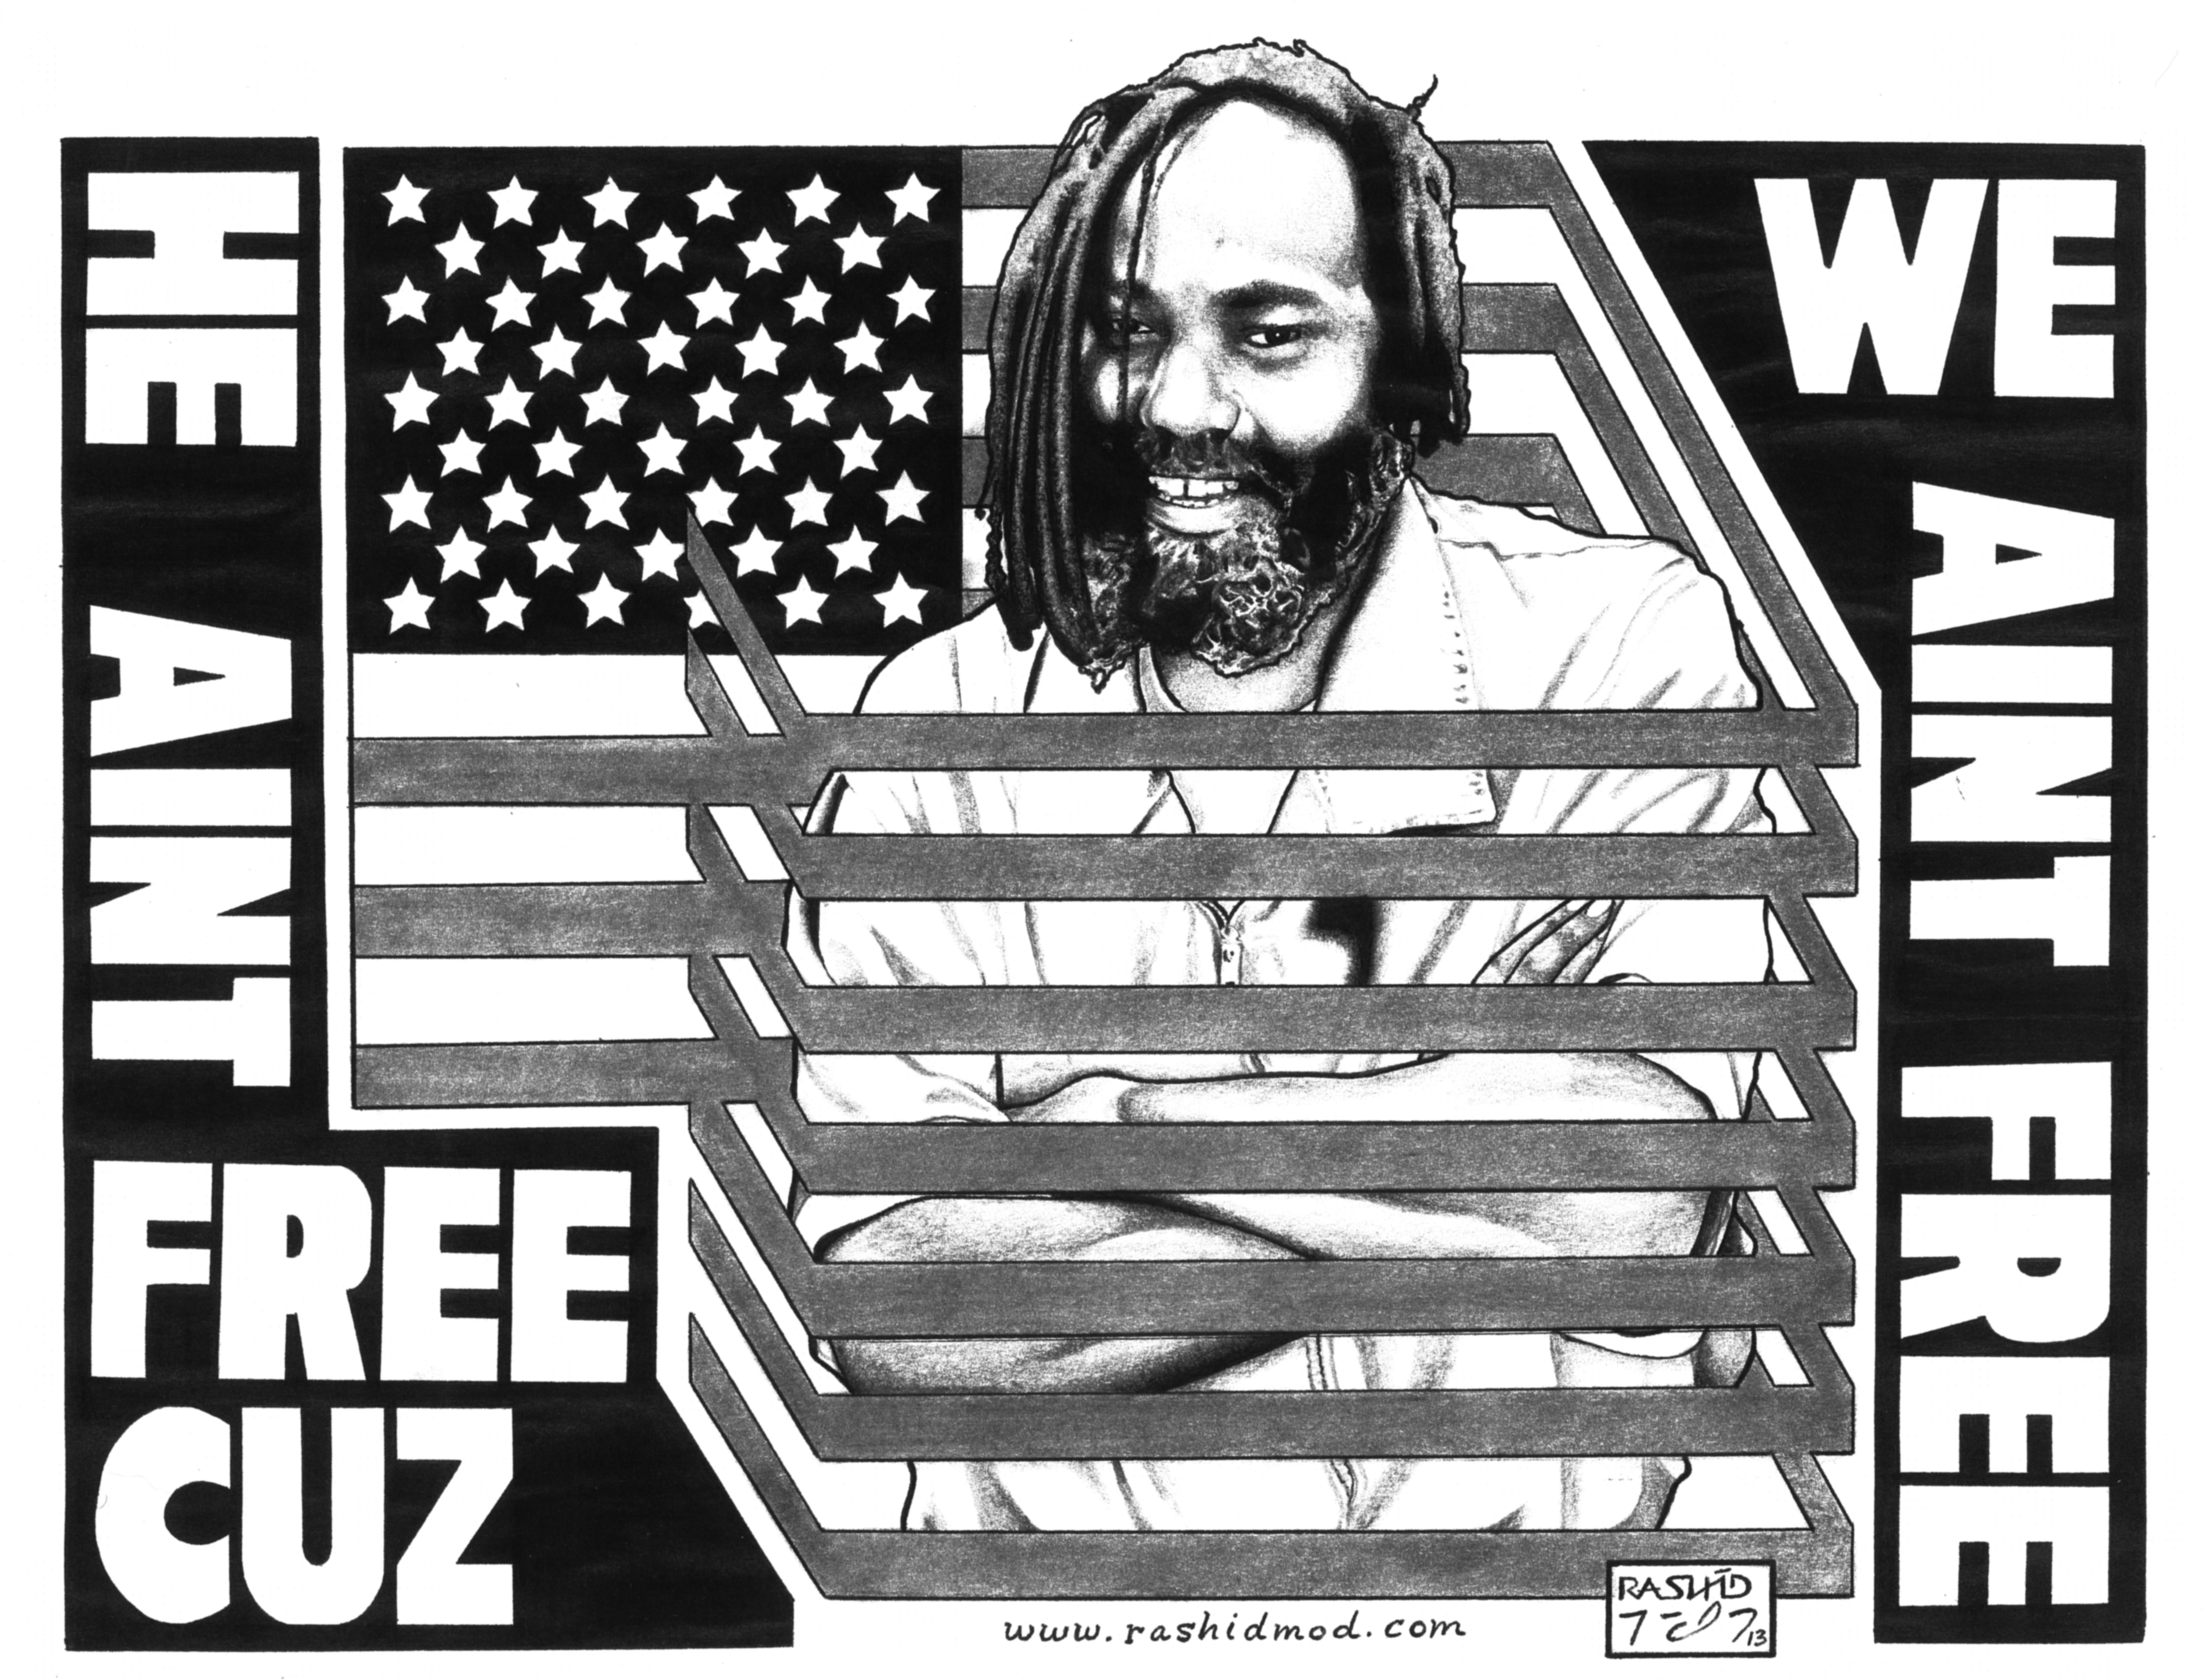 He Ain't Free Cuz We Ain't Free (Mumia Abu Jamal)